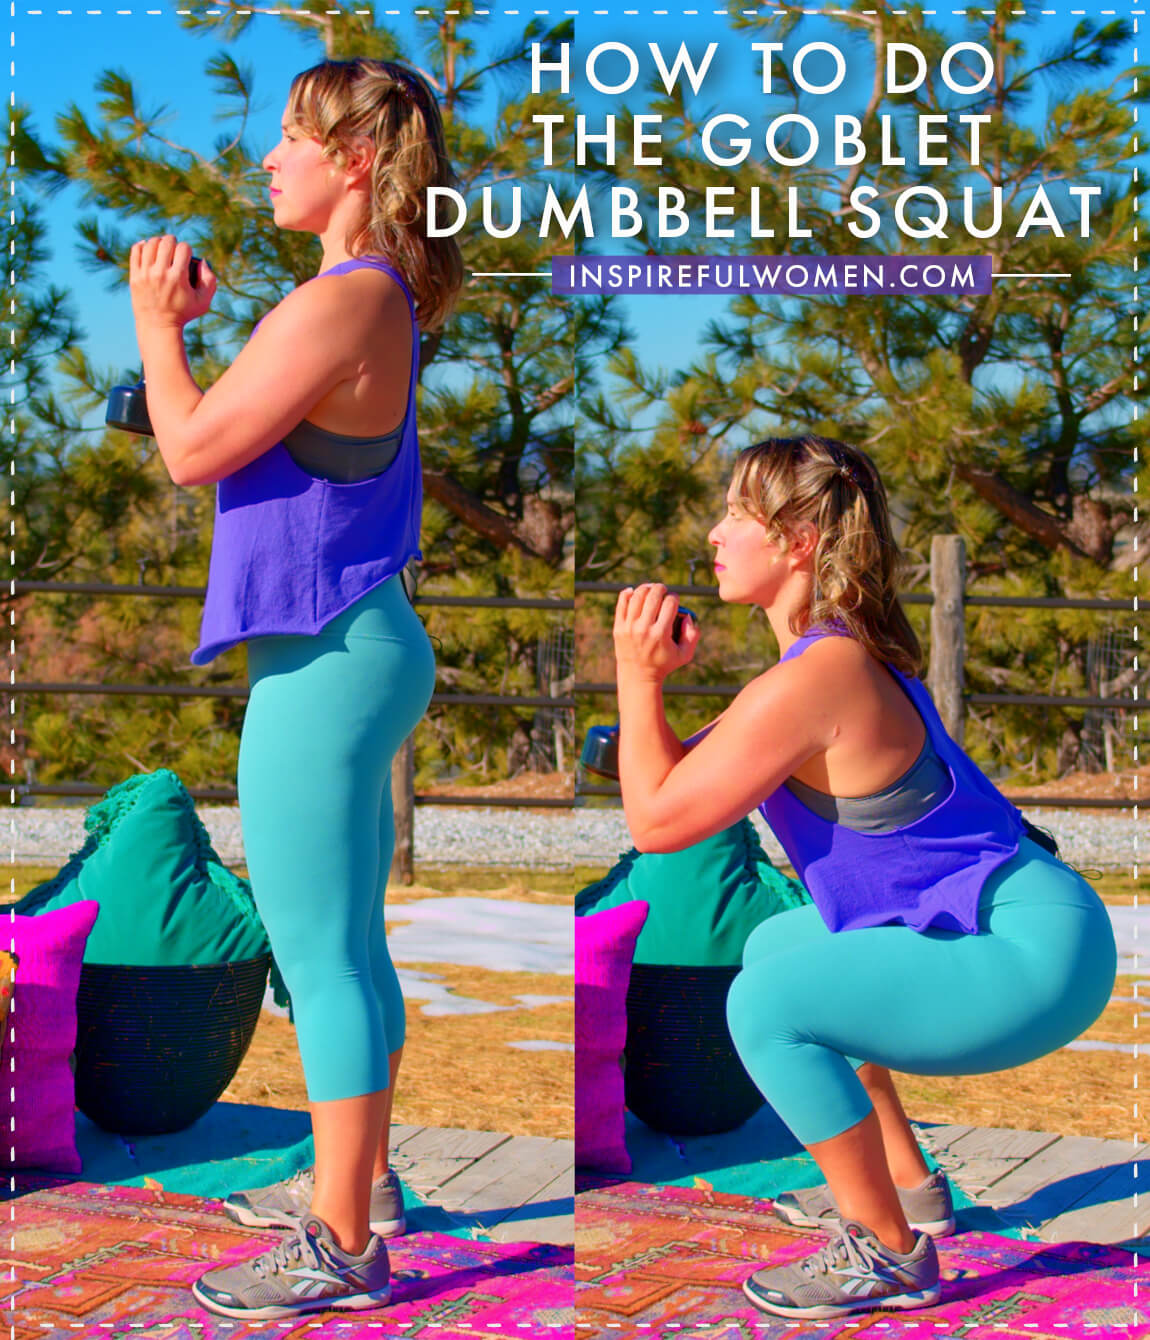 how-to-goblet-squats-dumbbells-quads-glutes-exercise-proper-form